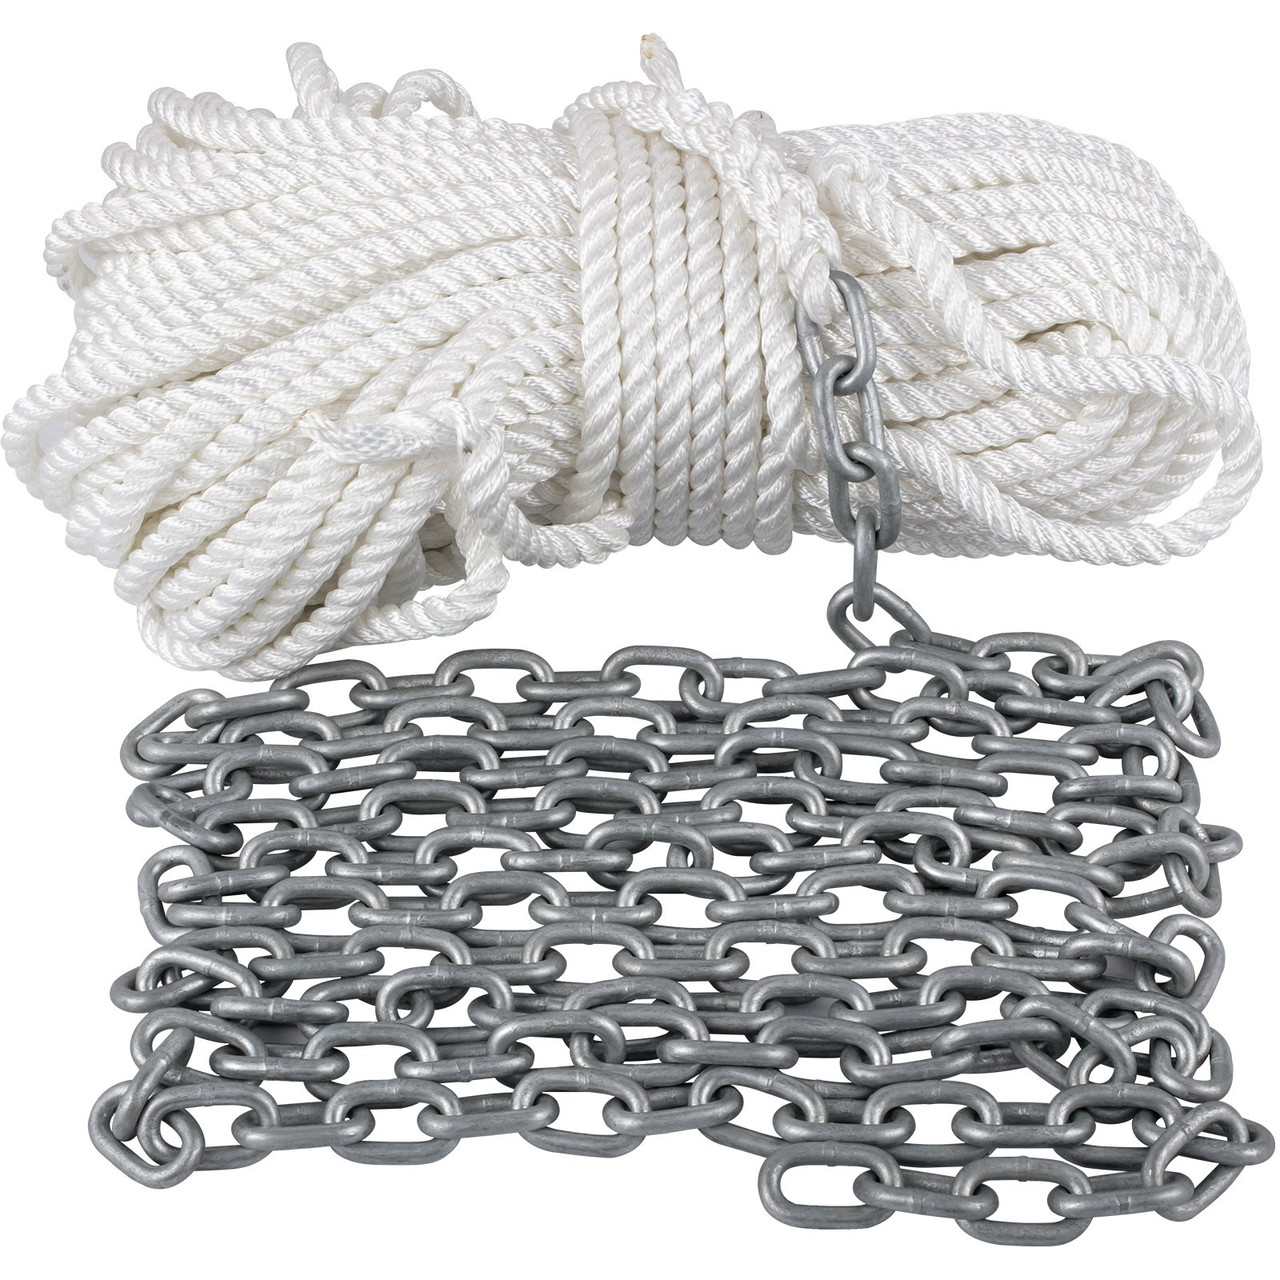 Boat Anchor Chain 15' x 5/16 Galvanized Chain 1/2 x 200' Nylon Rope